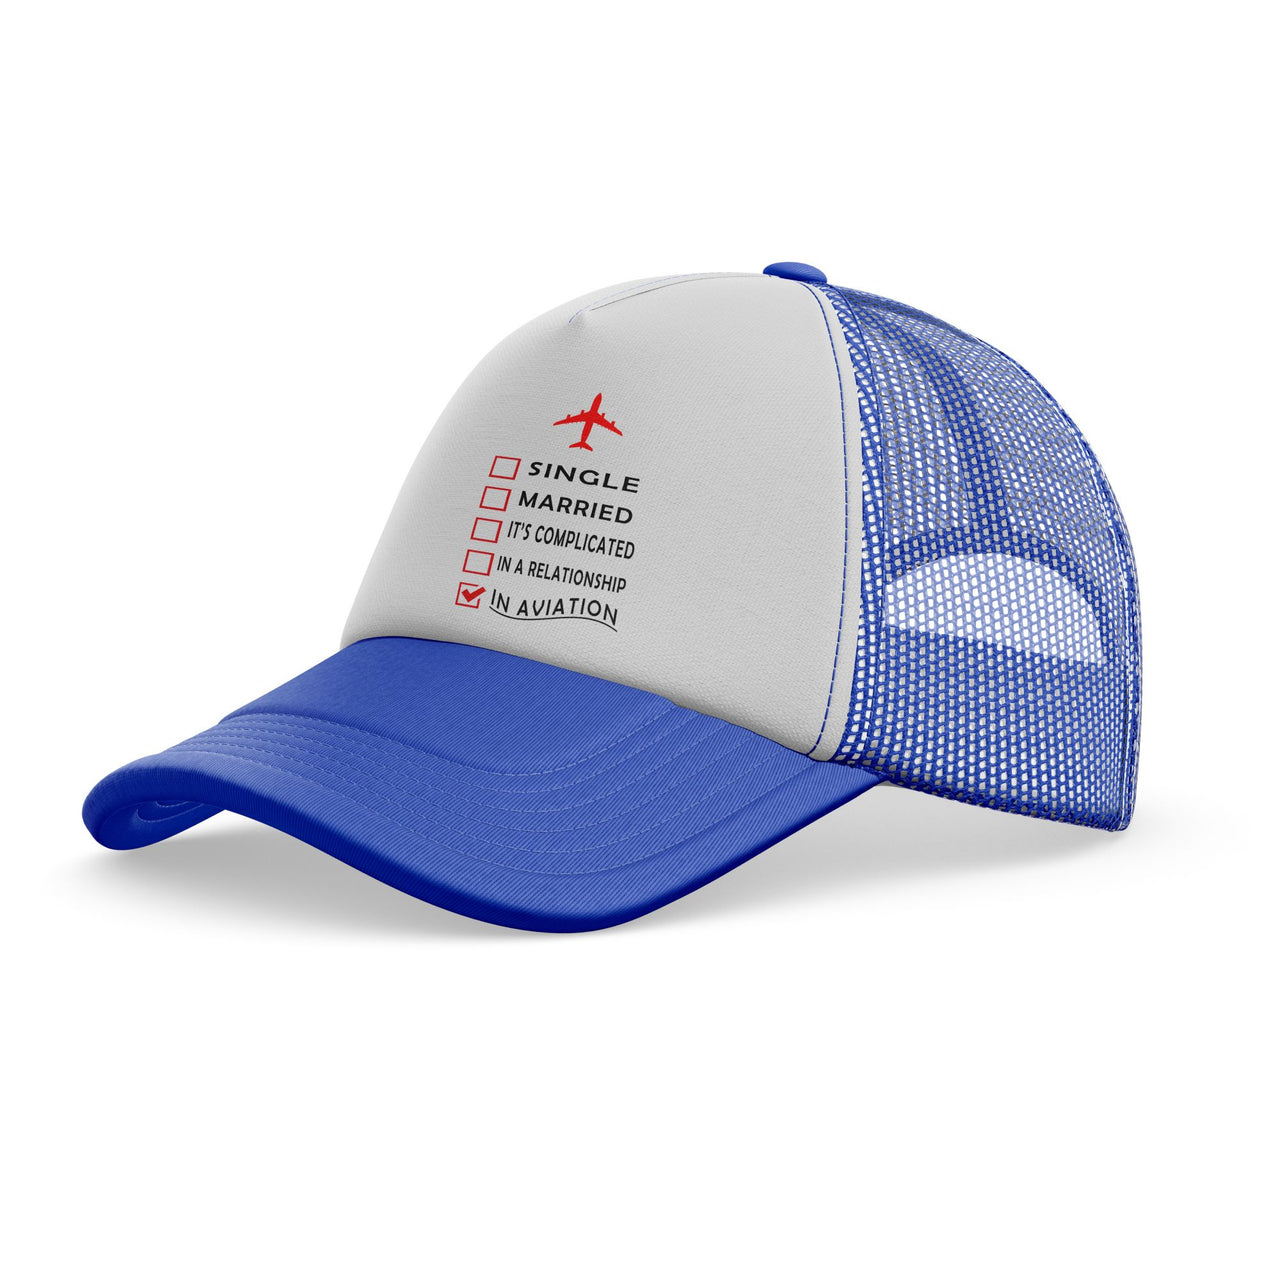 In Aviation Designed Trucker Caps & Hats